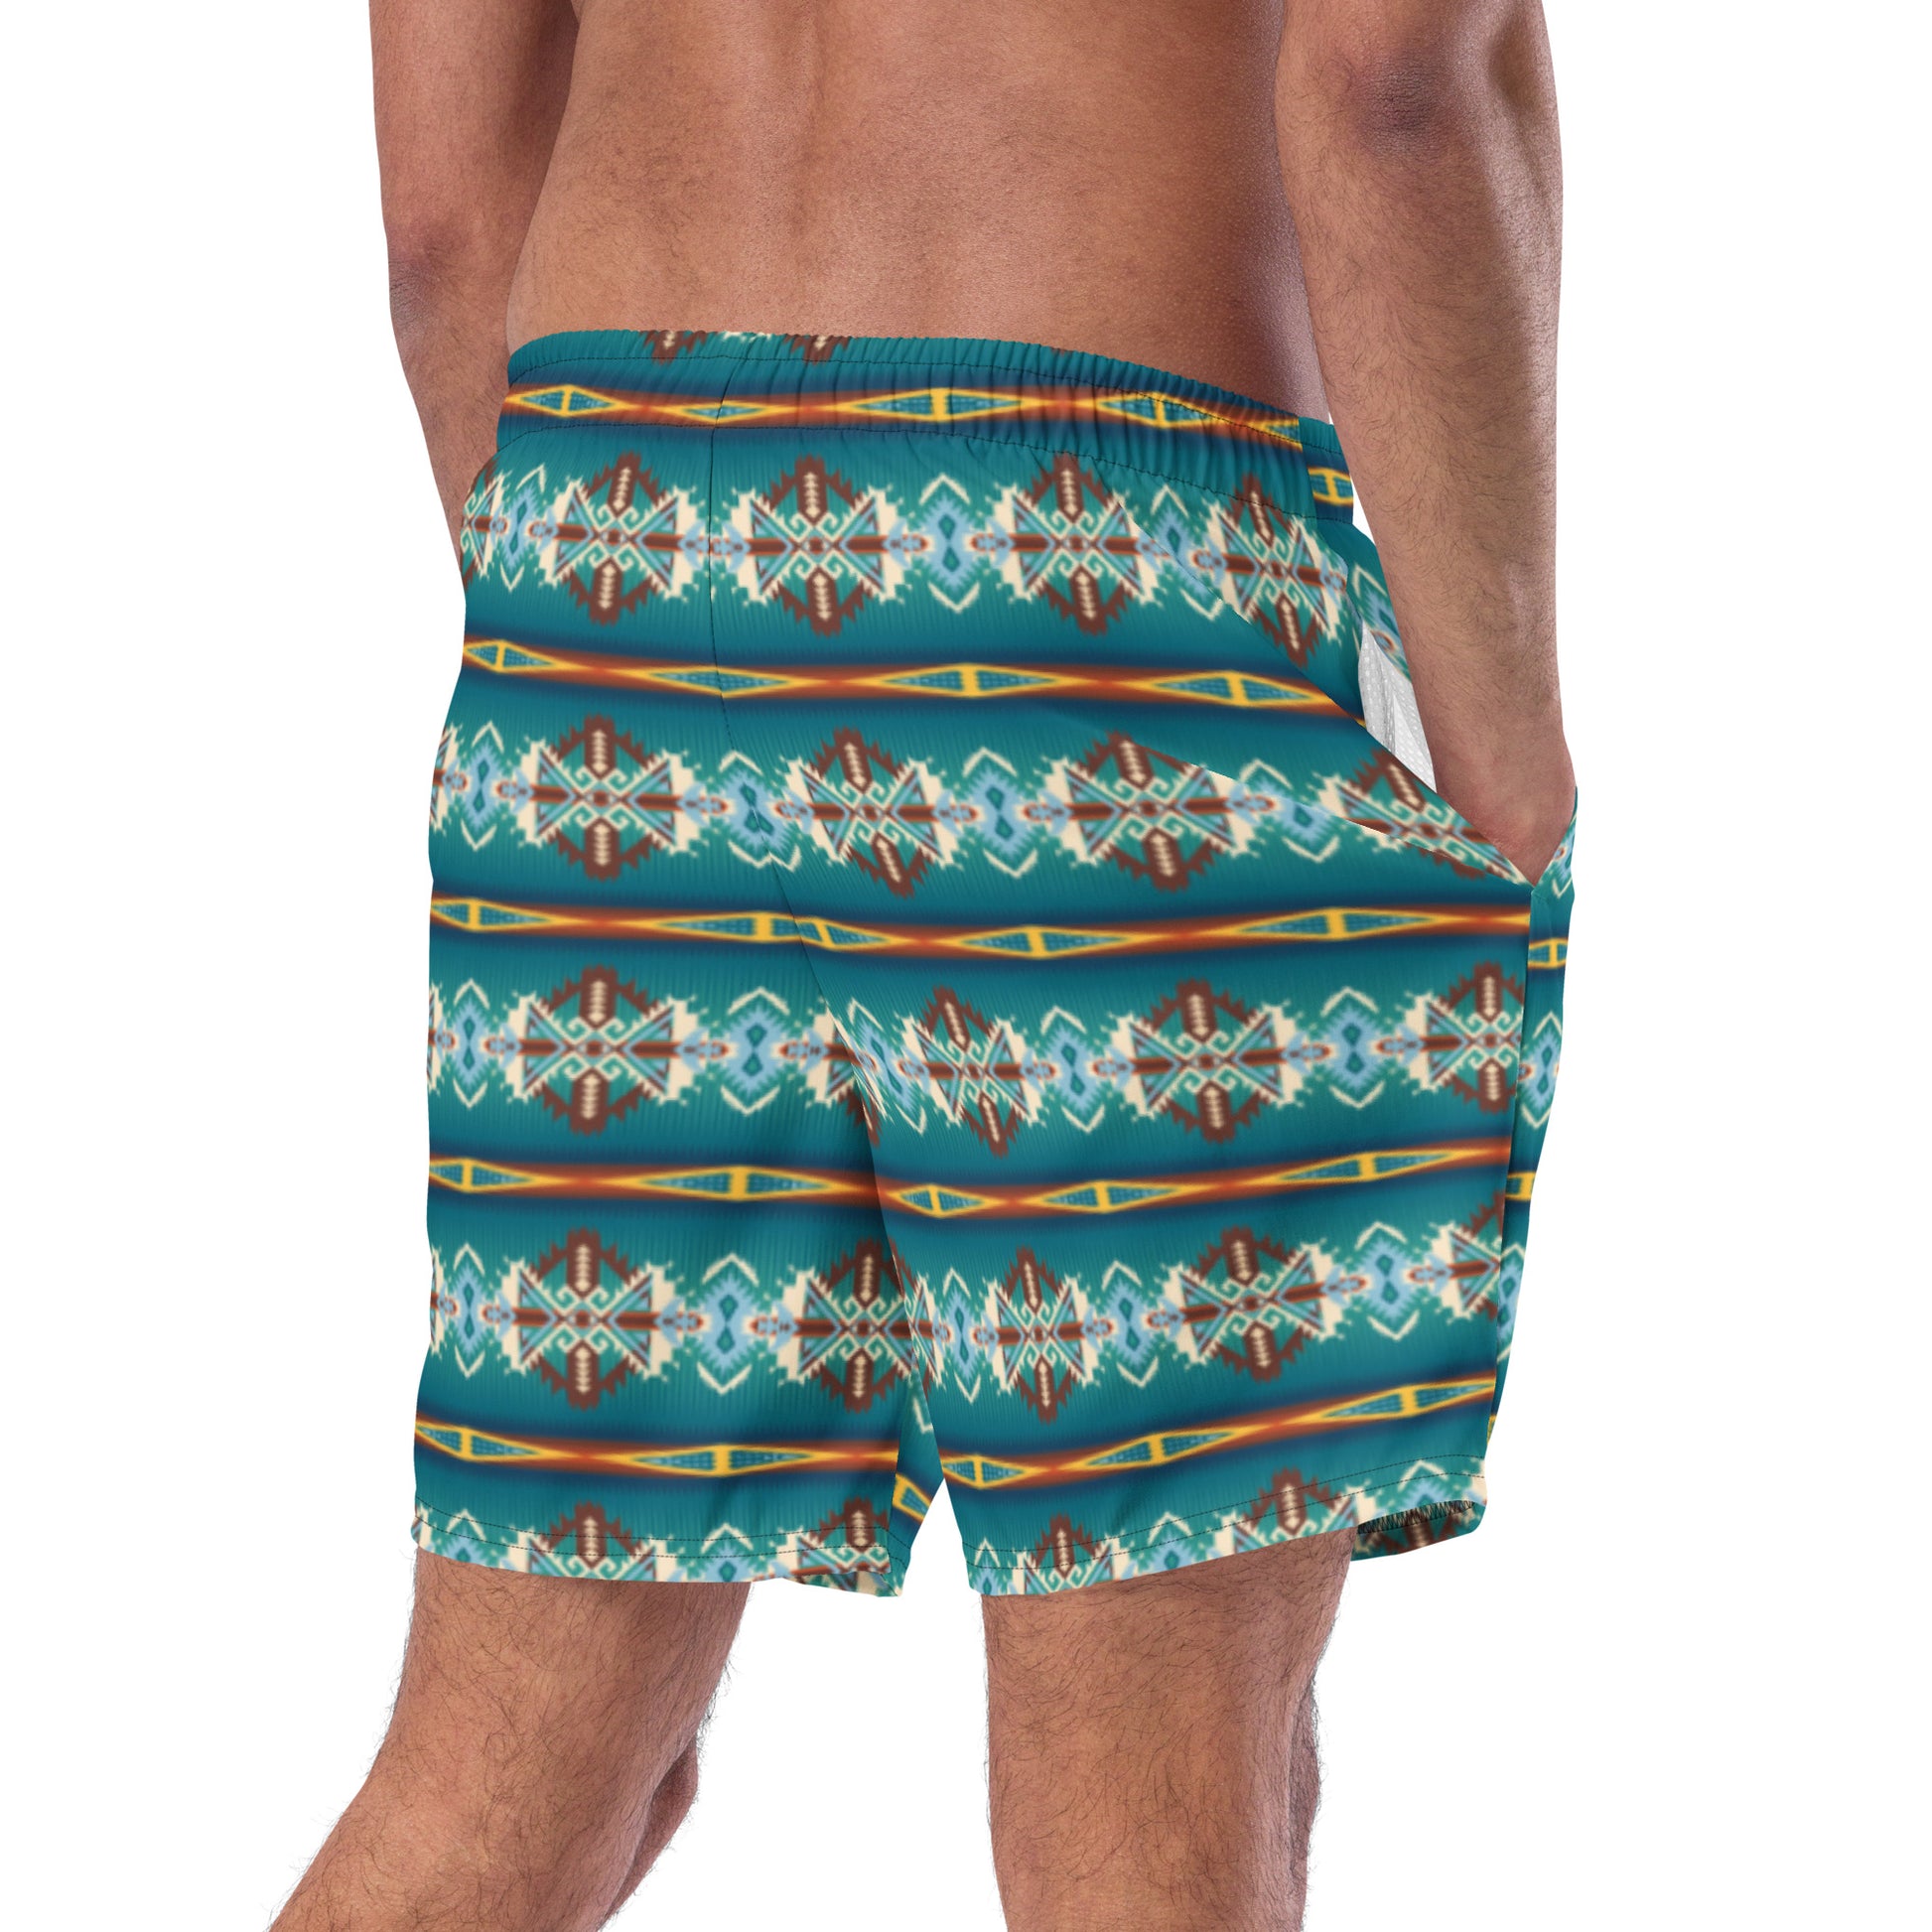 Teal Aztec Blanket Print Mens Swim Shorts - aztec print, swim, swim shorts, swim trunks, swim wear, swimming, swimshorts, teal, teal aztec, trunks, western -  - Baha Ranch Western Wear